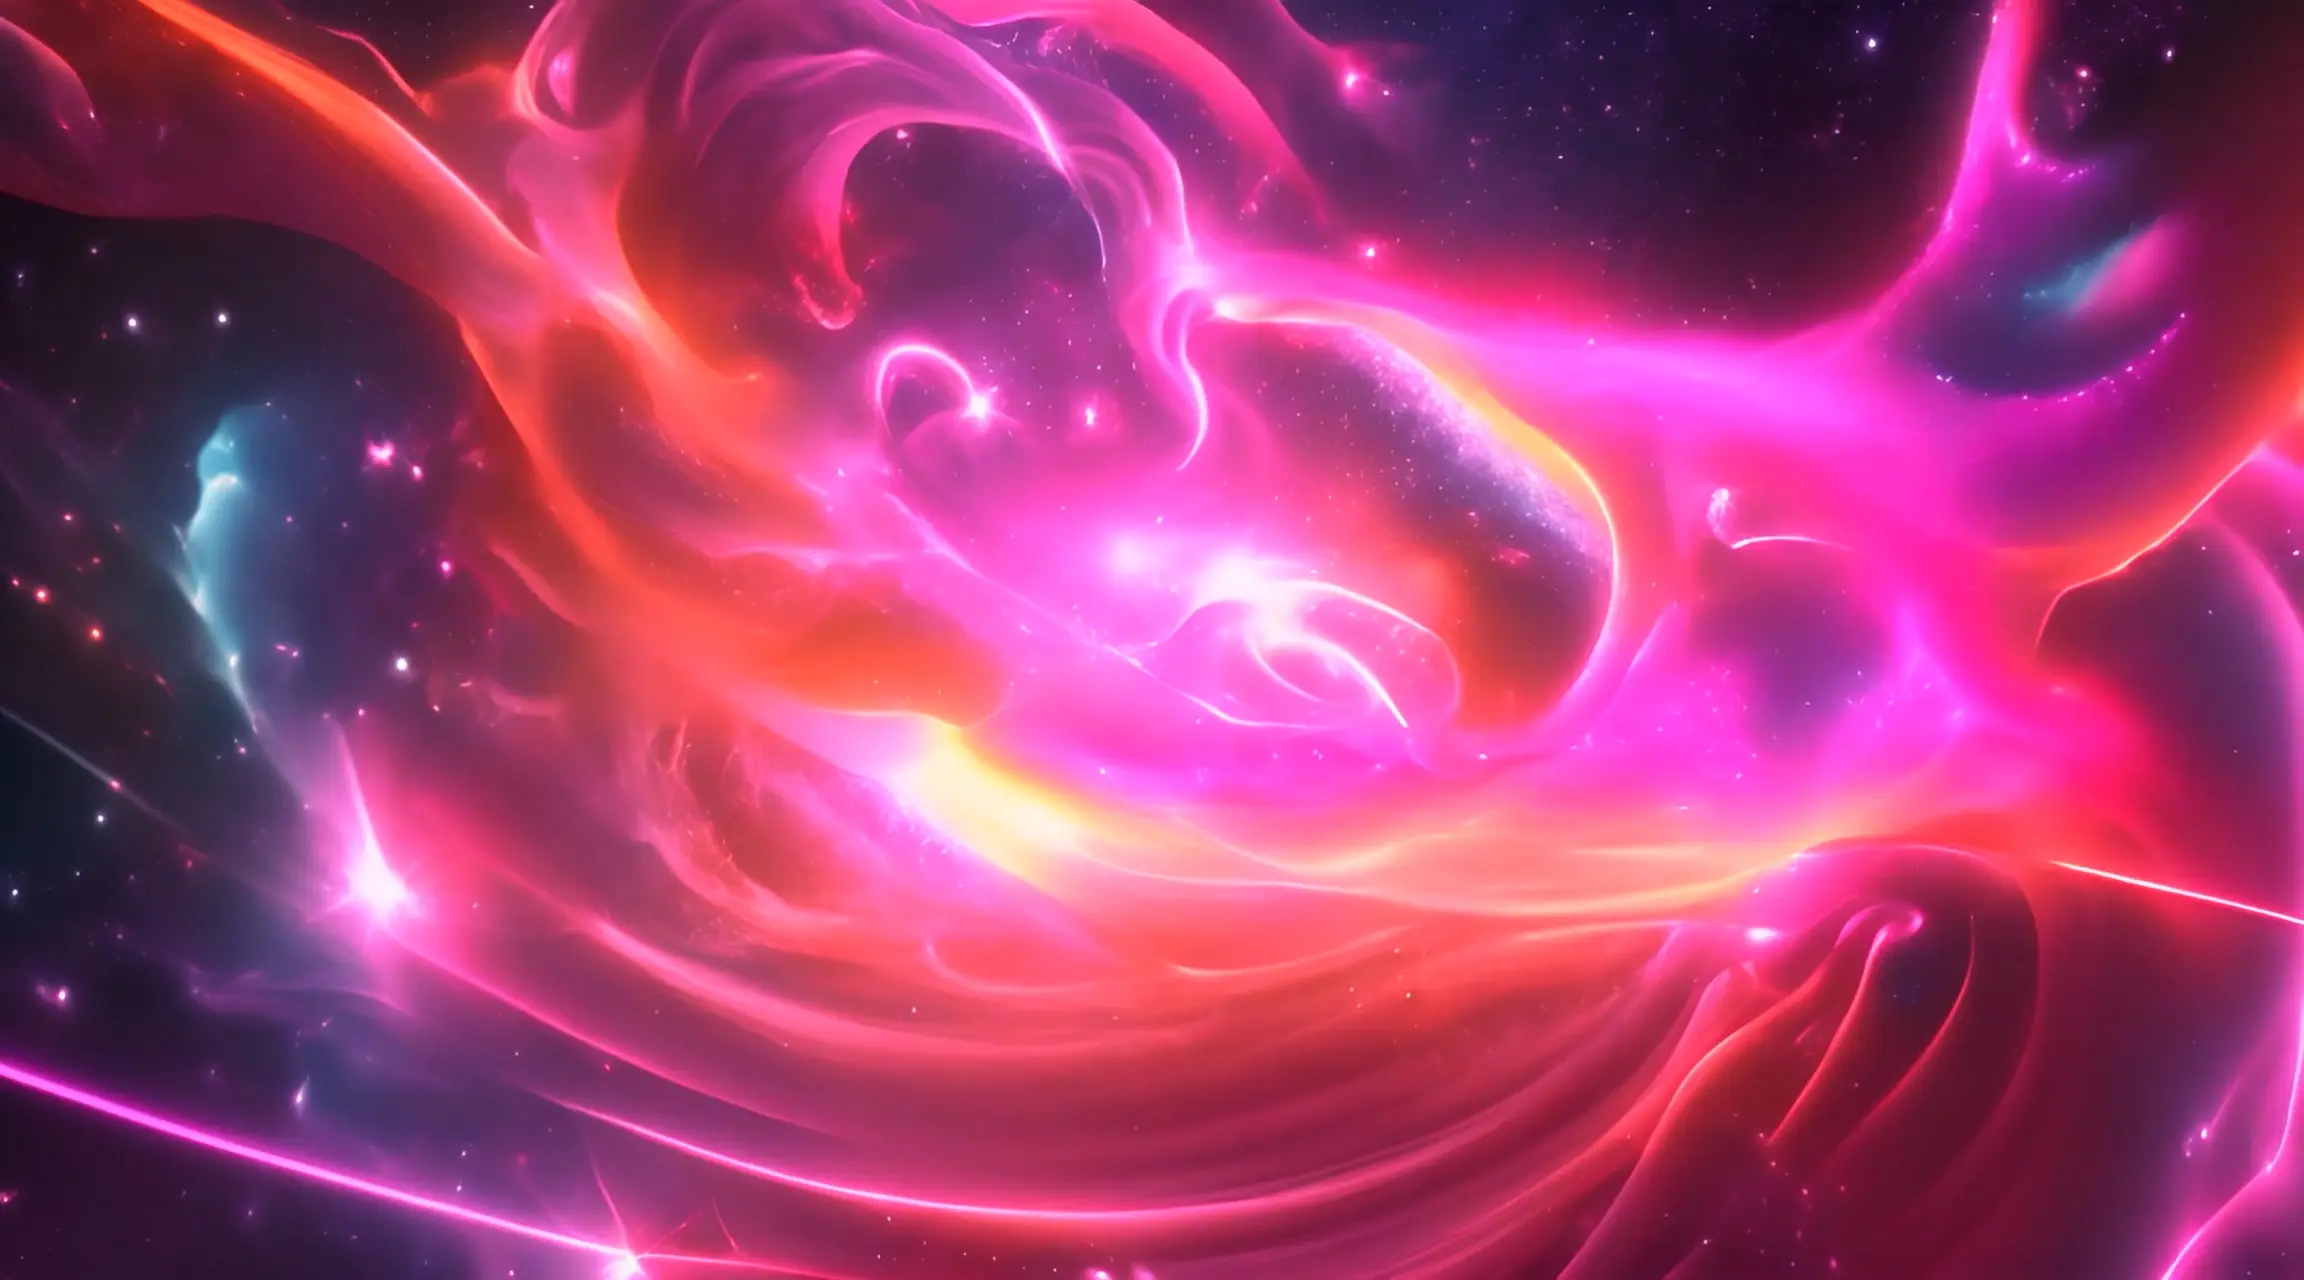 Vivid Galaxy Whirl Hypnotic Space Stock Video